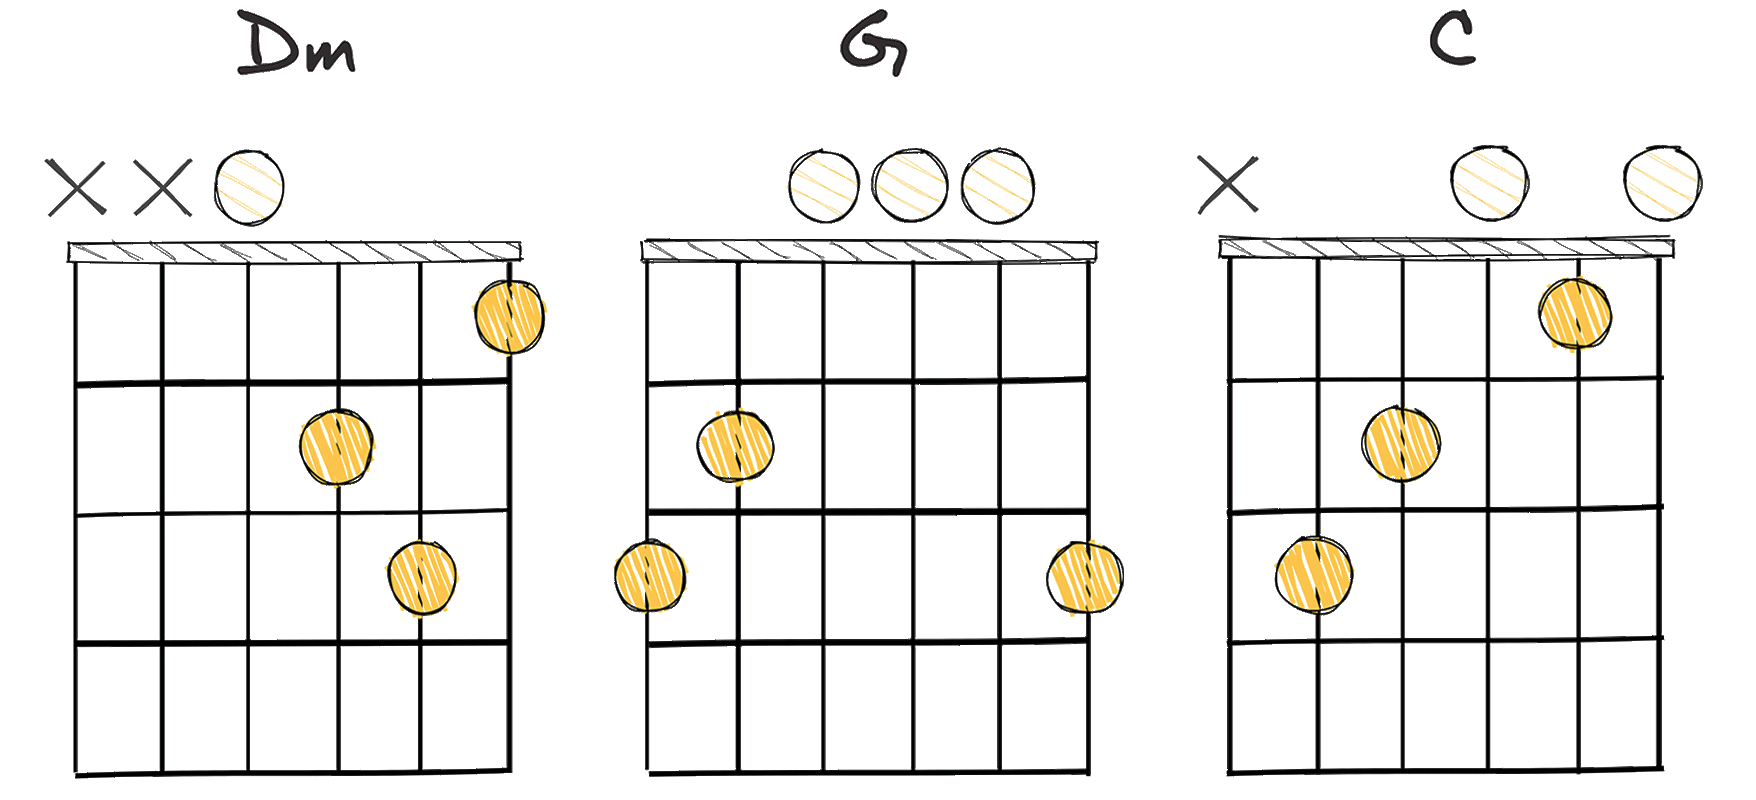 ii-V-I (2-5-1) chords diagram